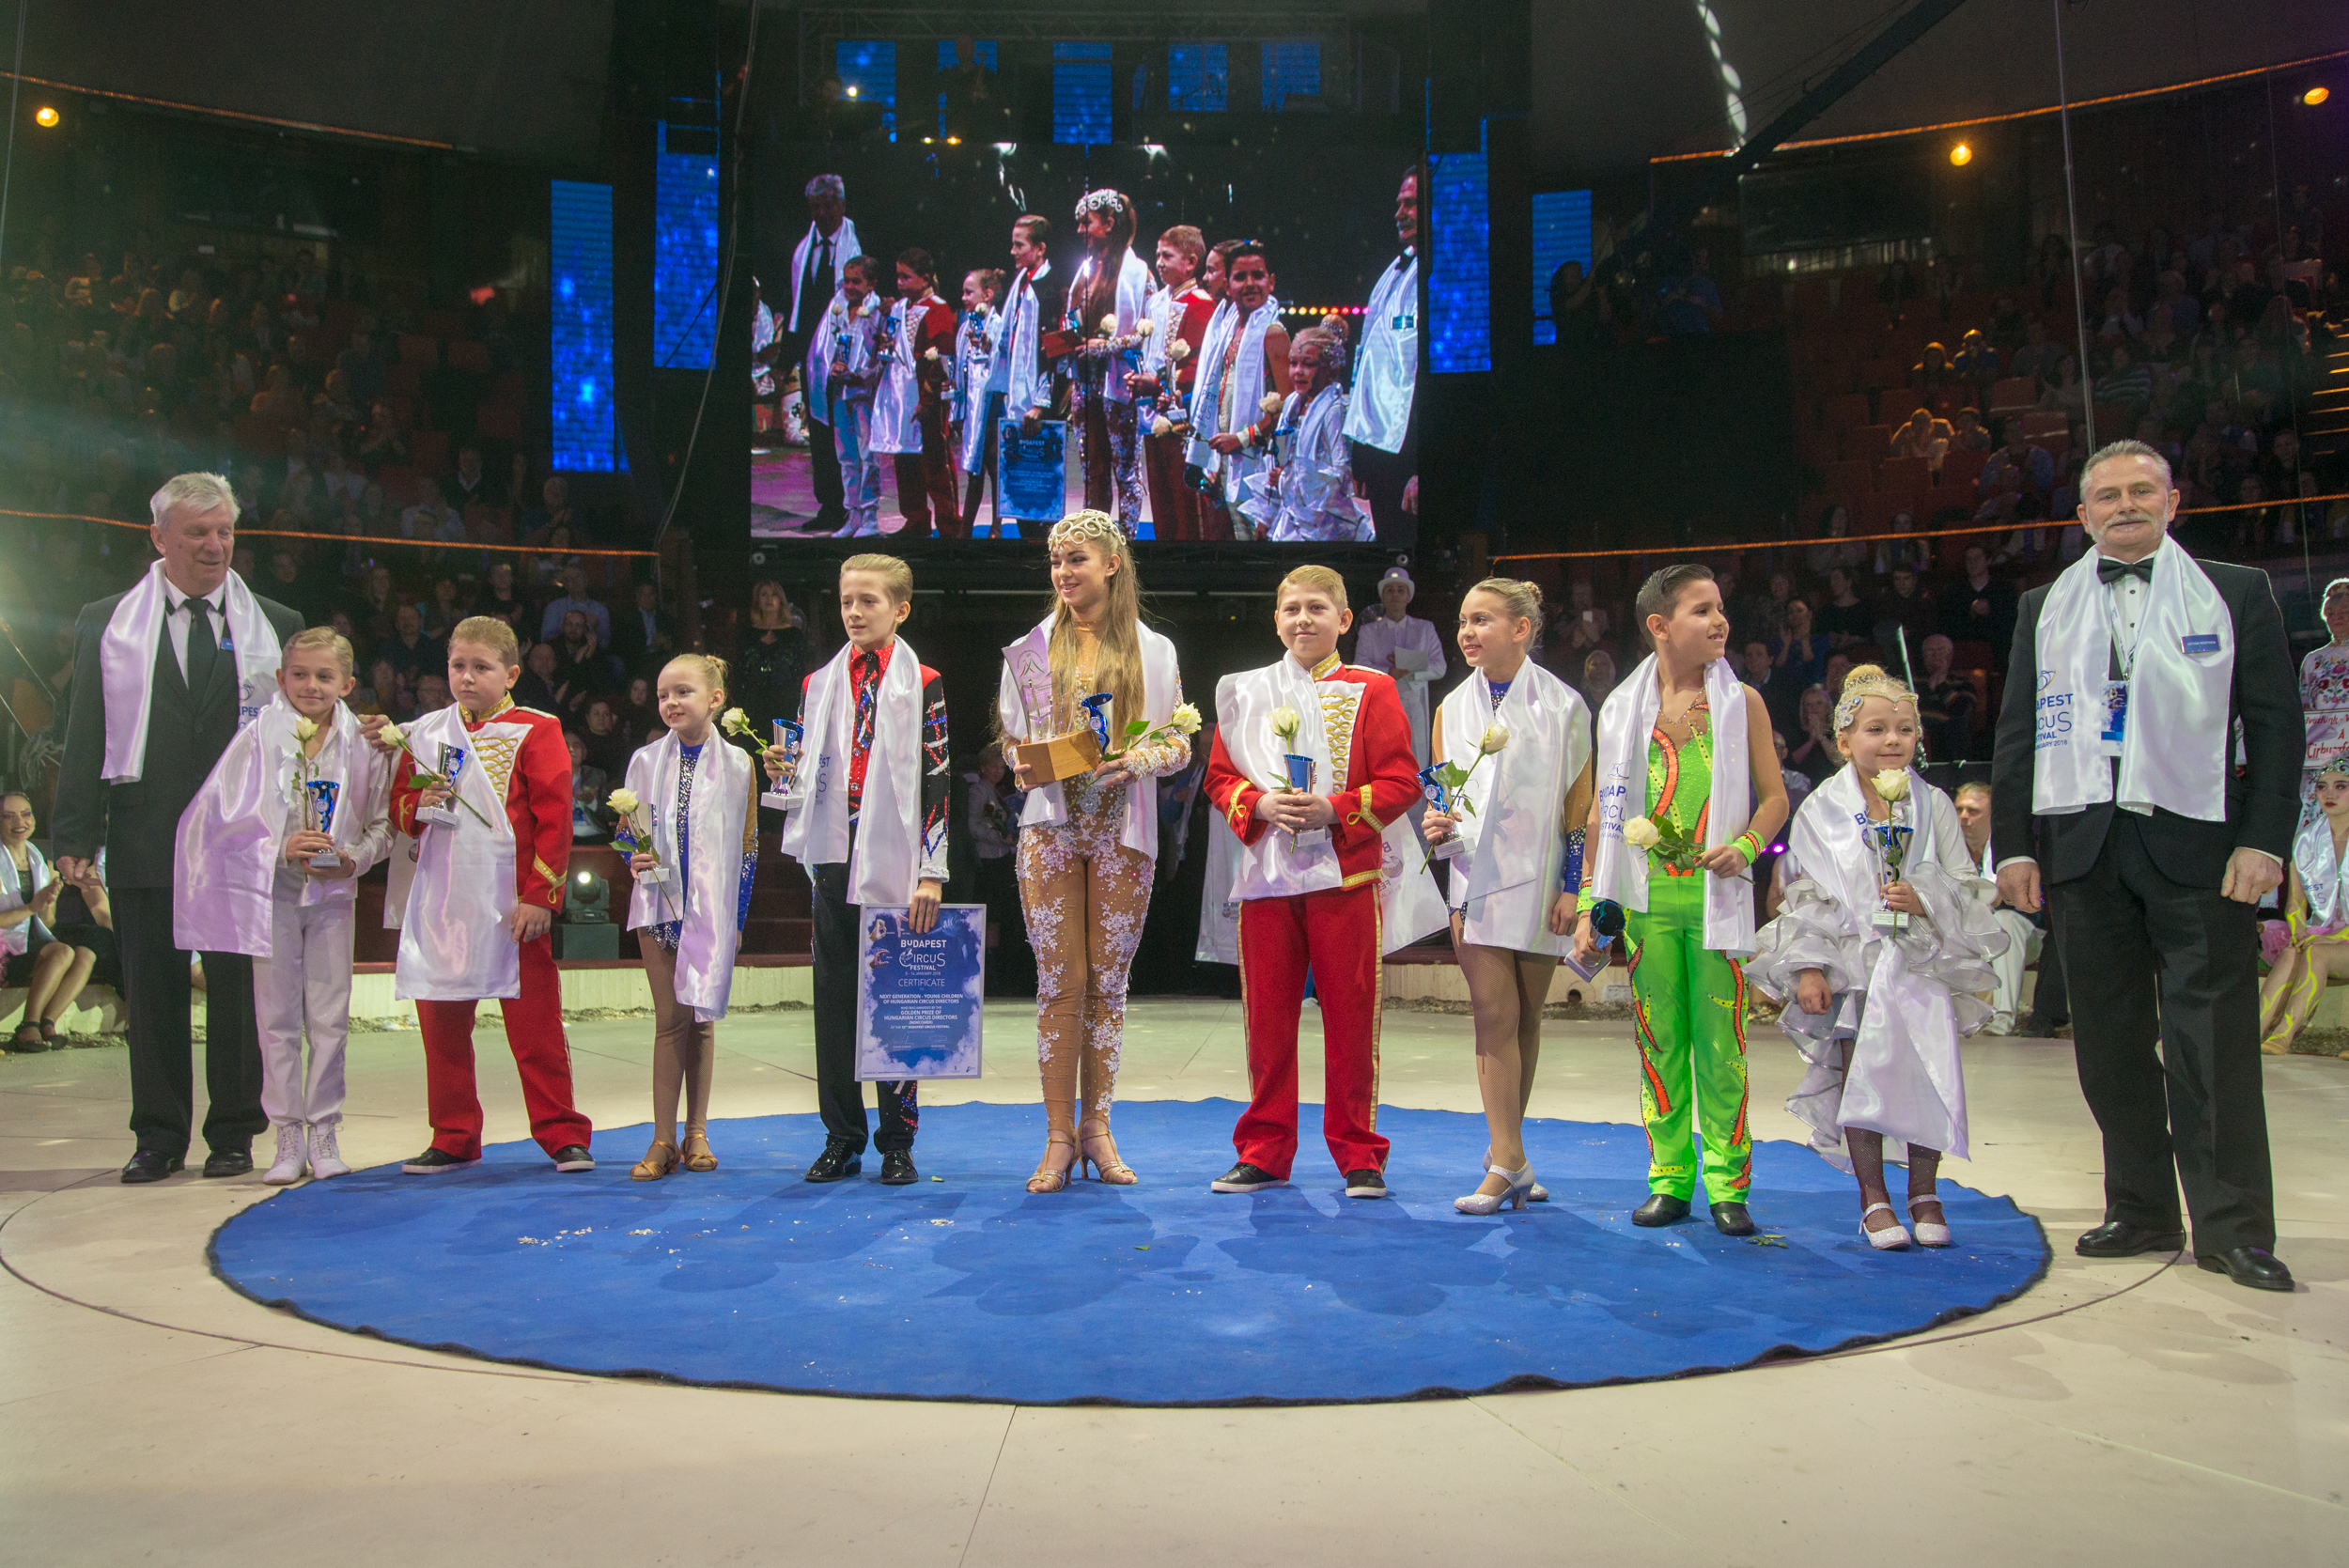 cirkus budapest 2015